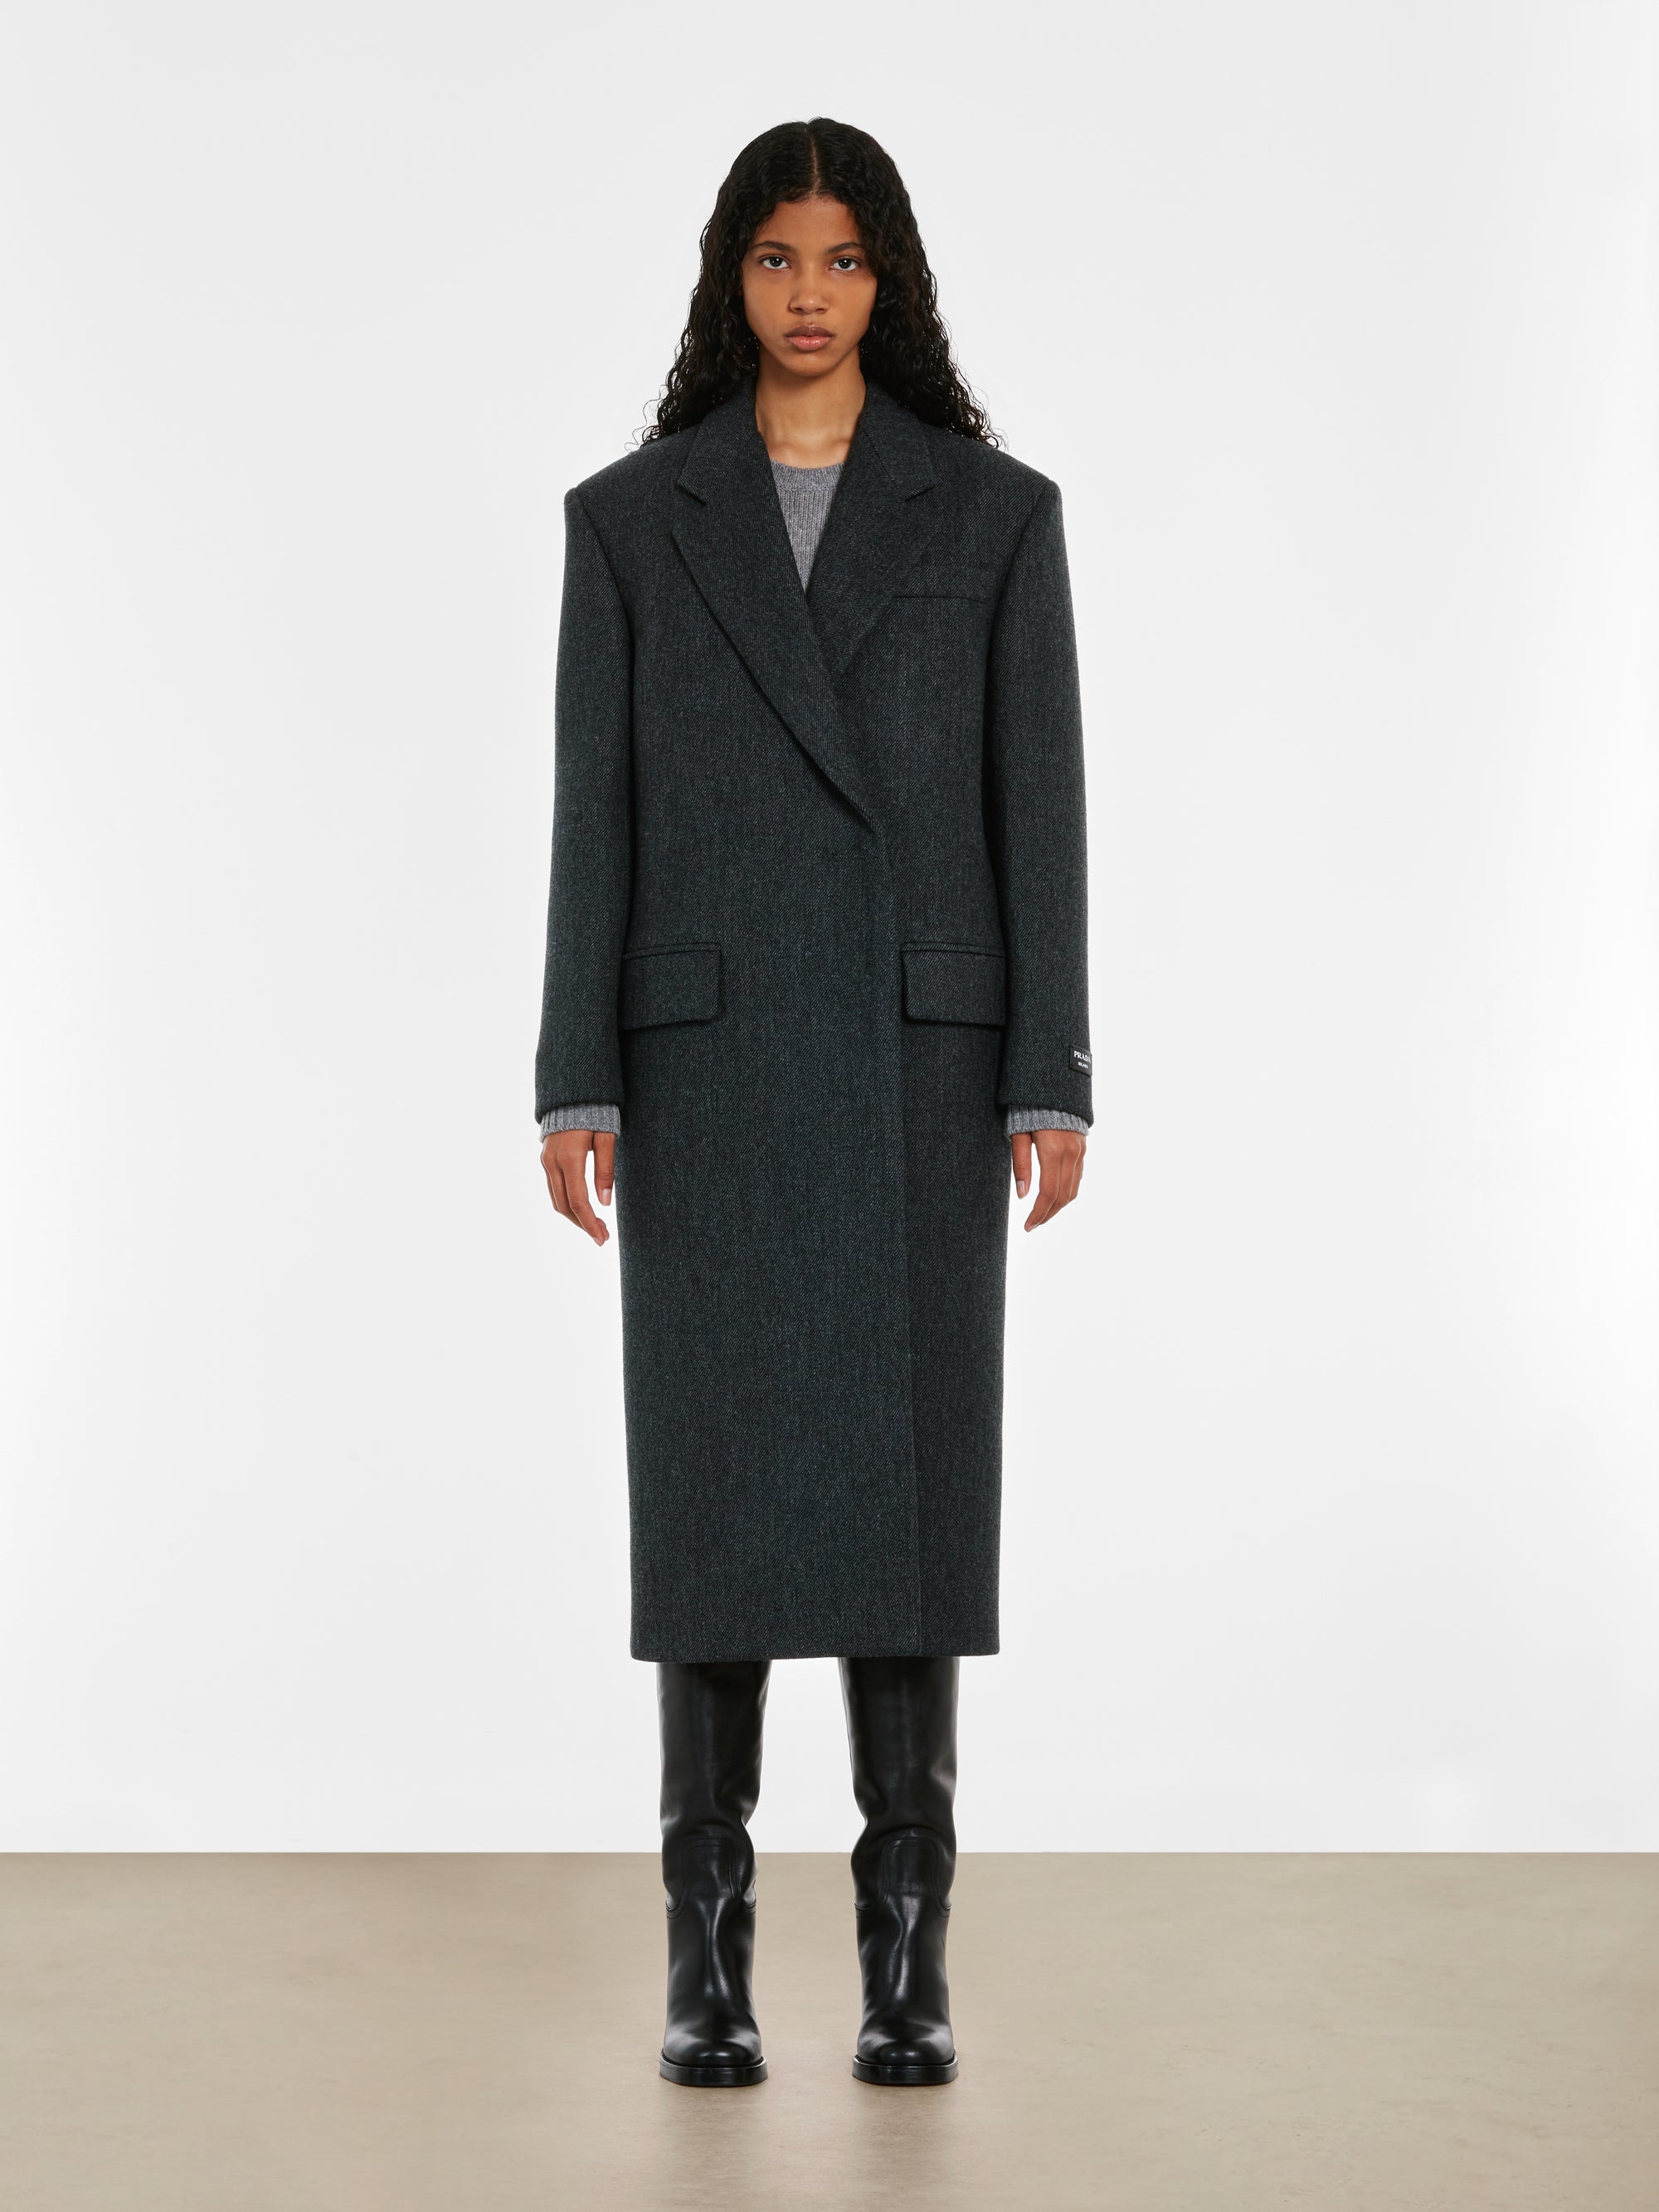 Prada - Women's Coat - (Grey) view 5